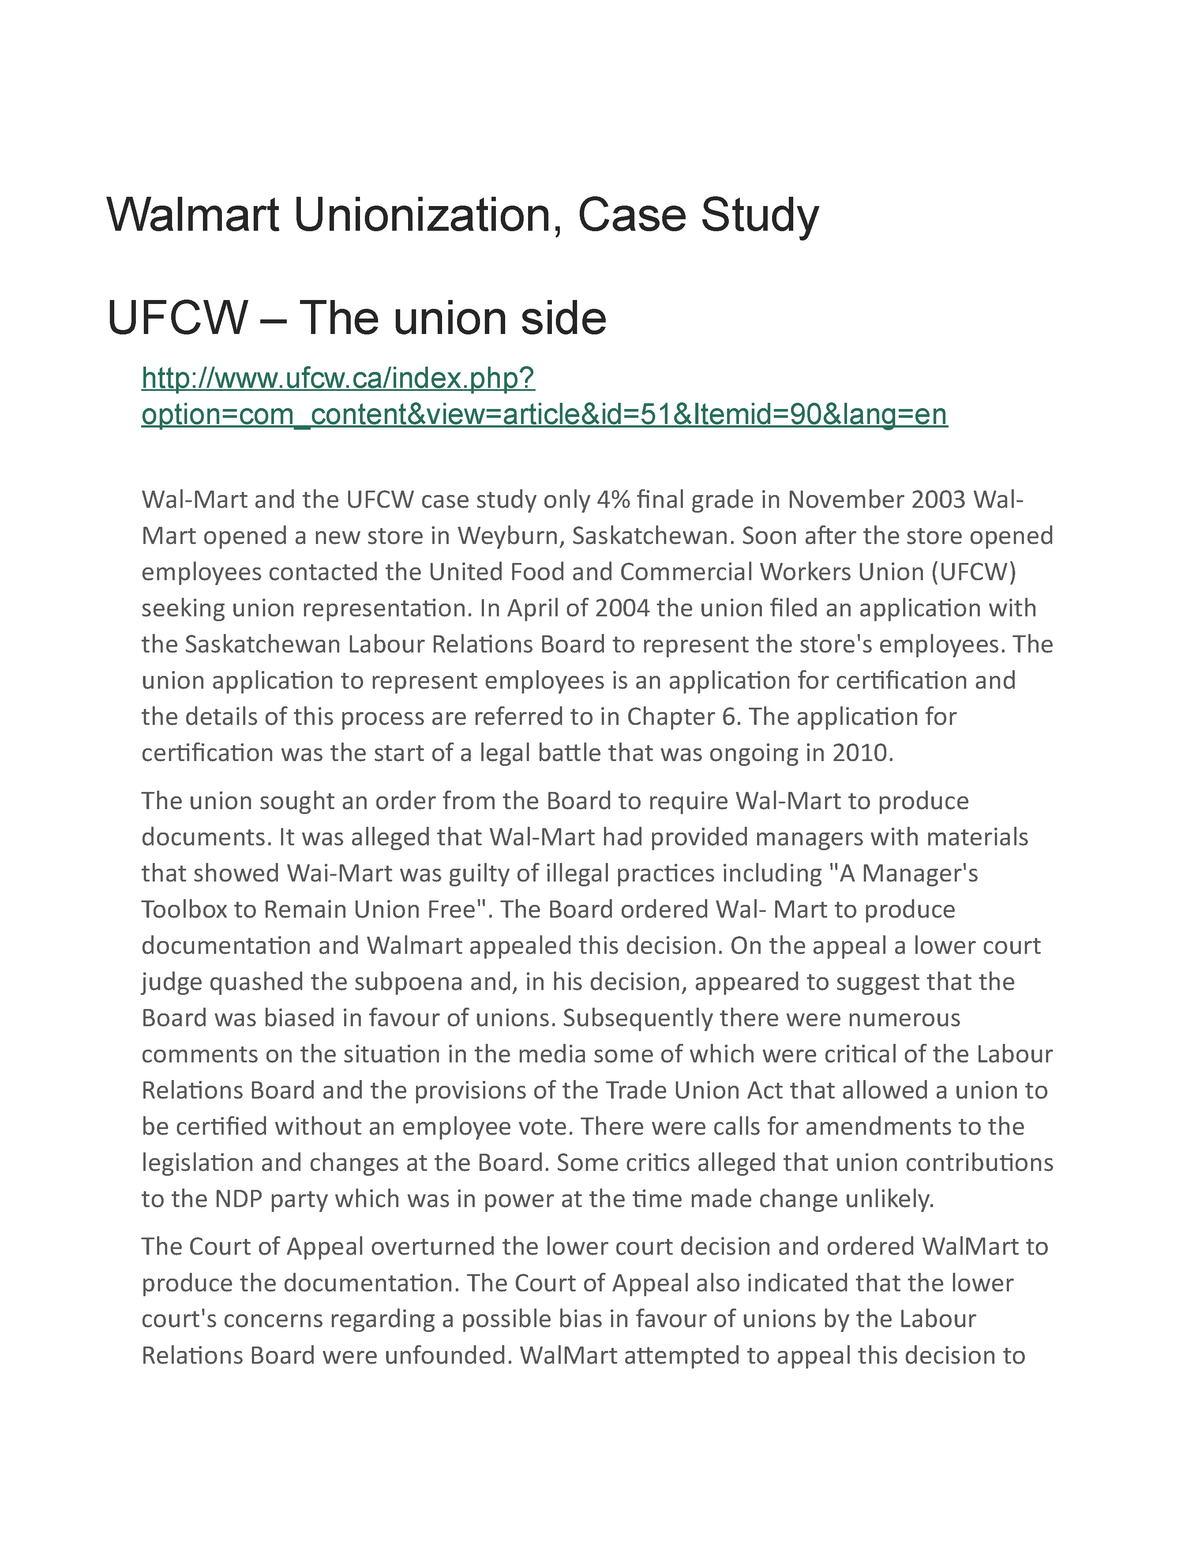 walmart and ufcw case study